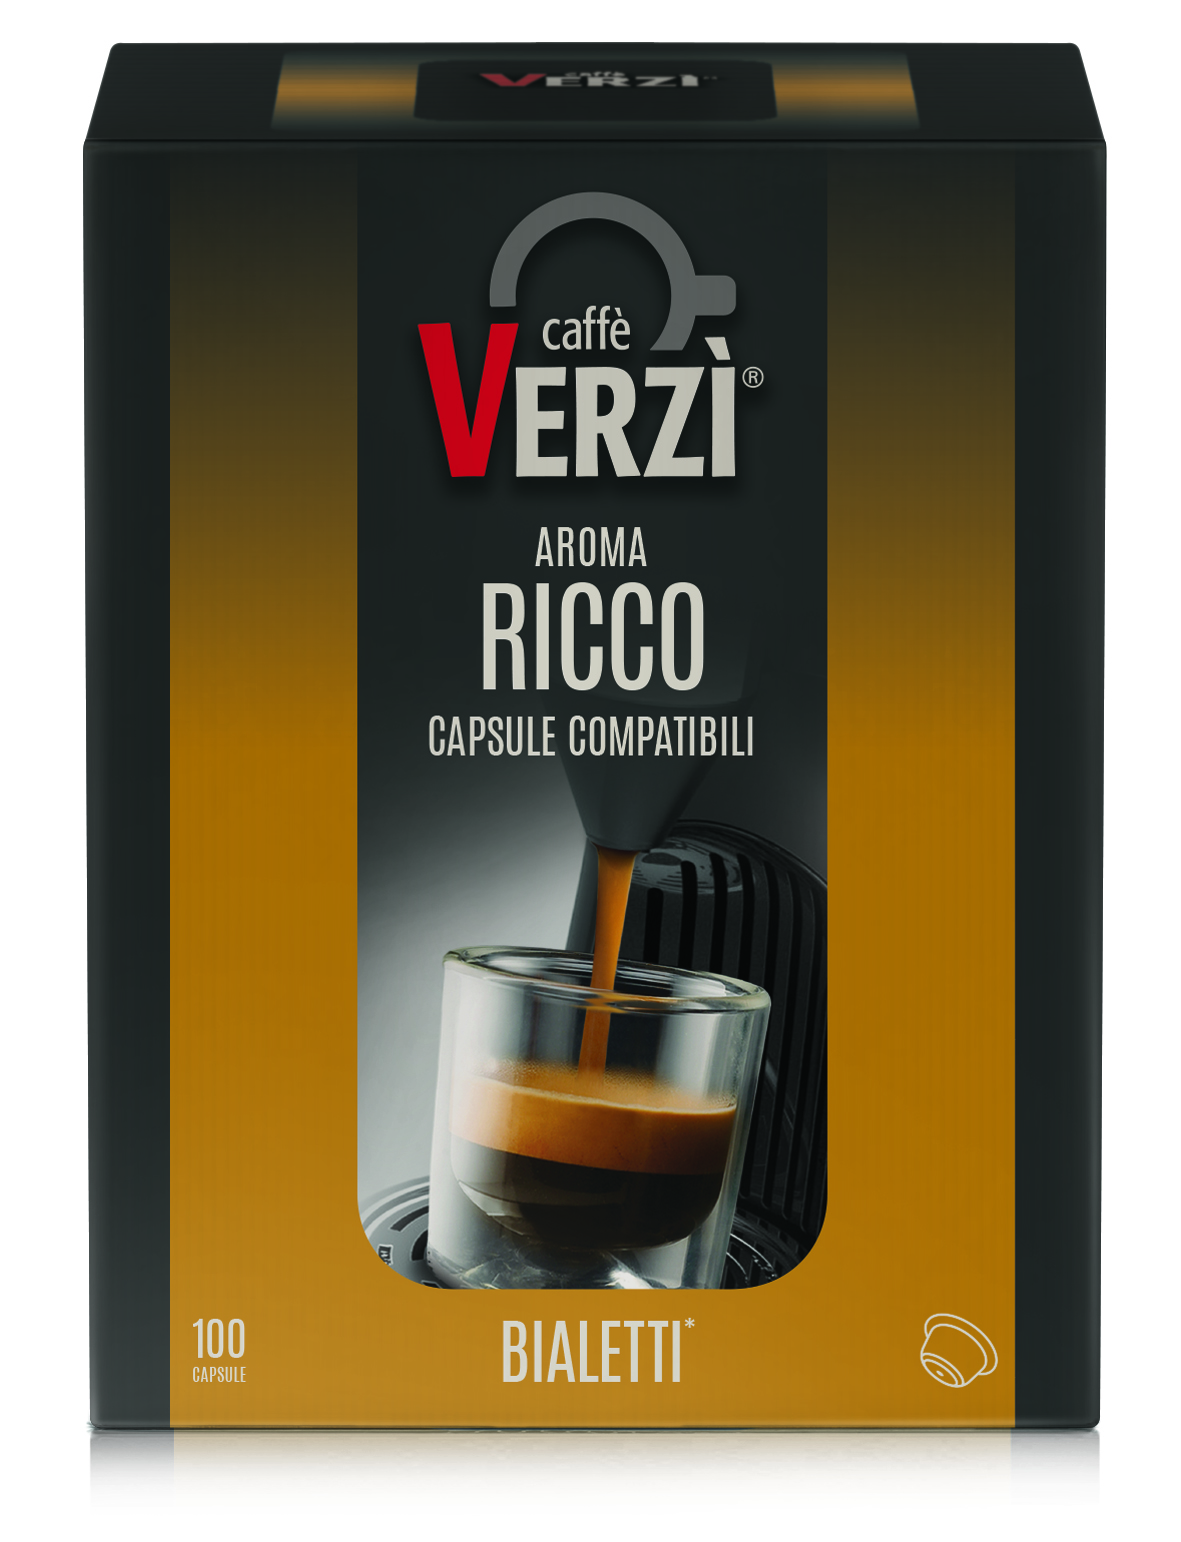 Capsule Compatibili Bialetti - Aroma Ricco - Verzì Caffè